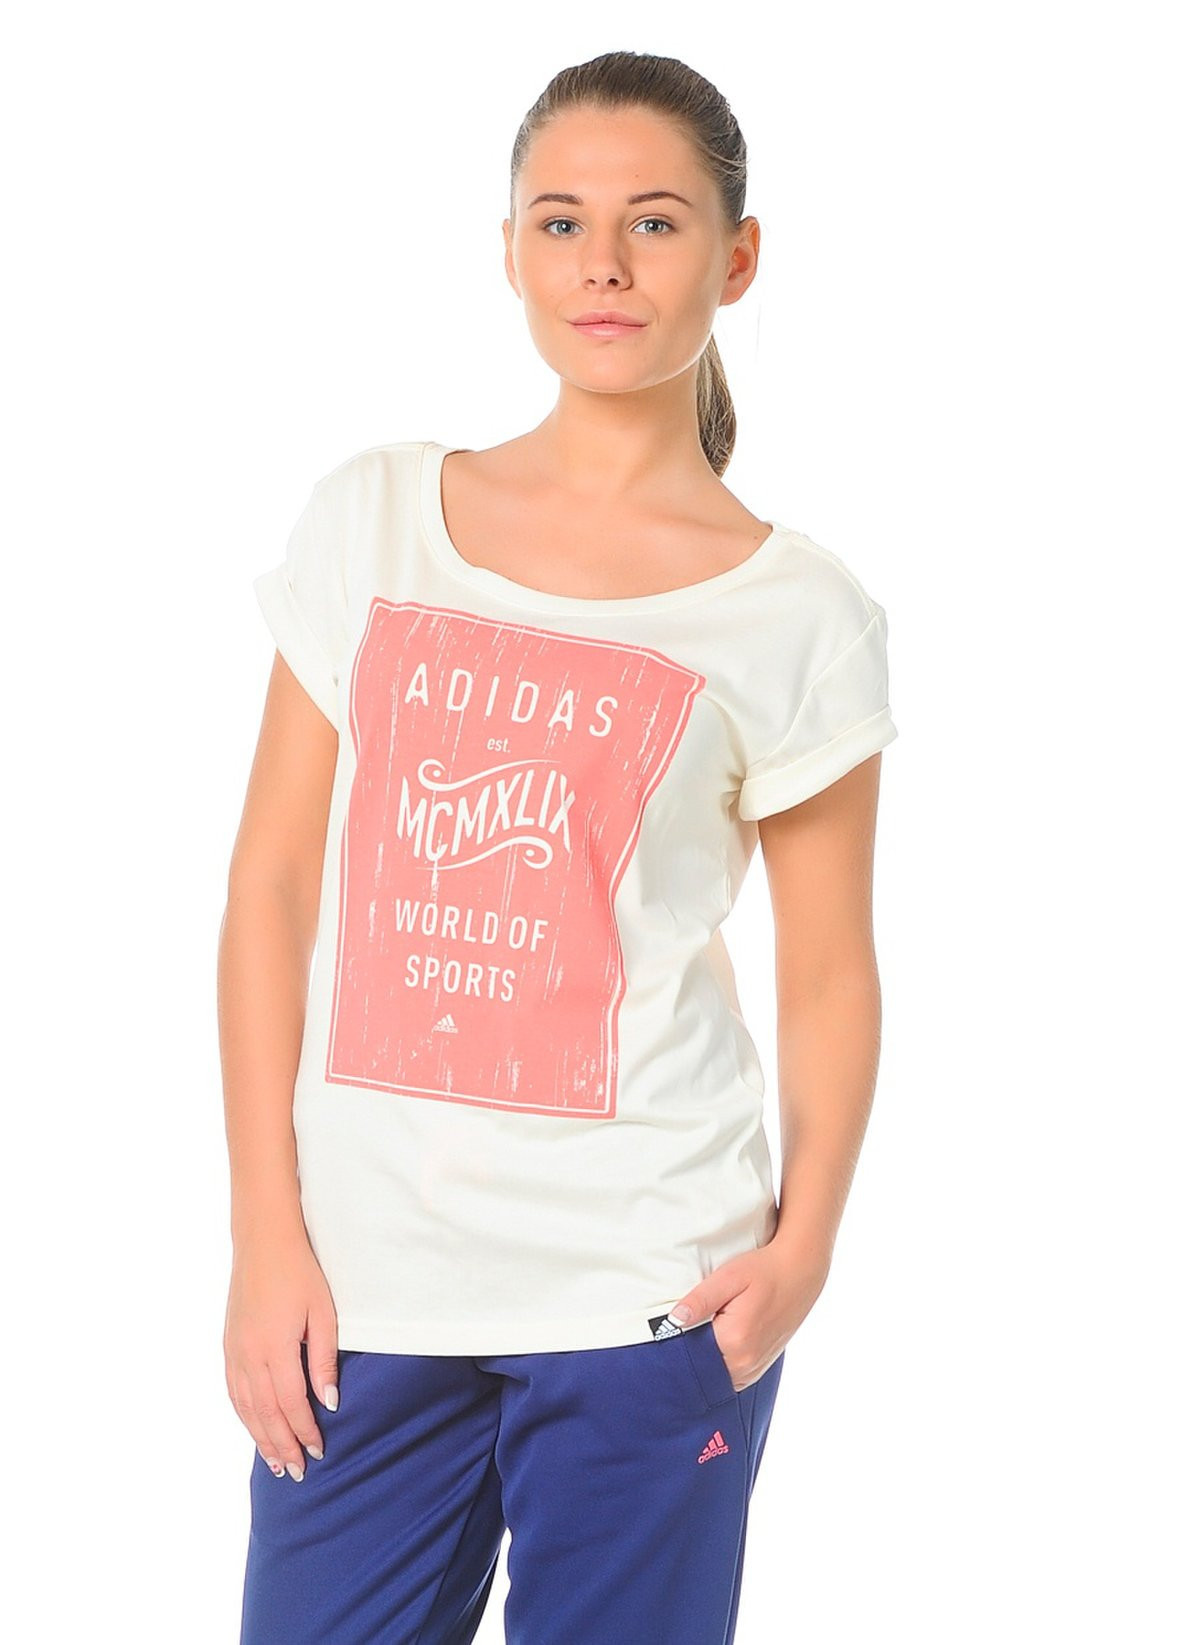 Adidas T-shirt World pour Femme